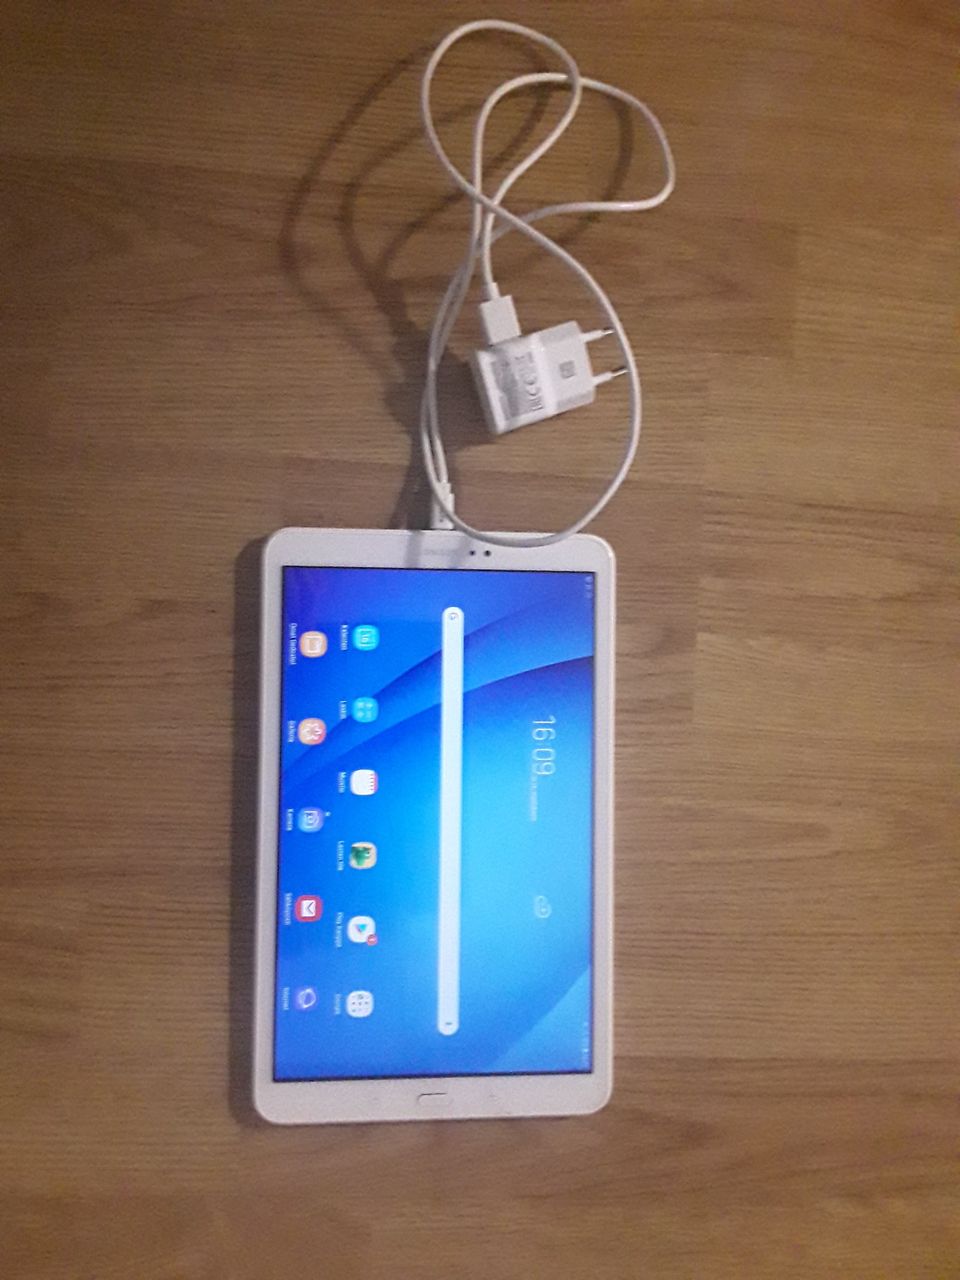 Samsung Galaxy tab valkoinen tabletti